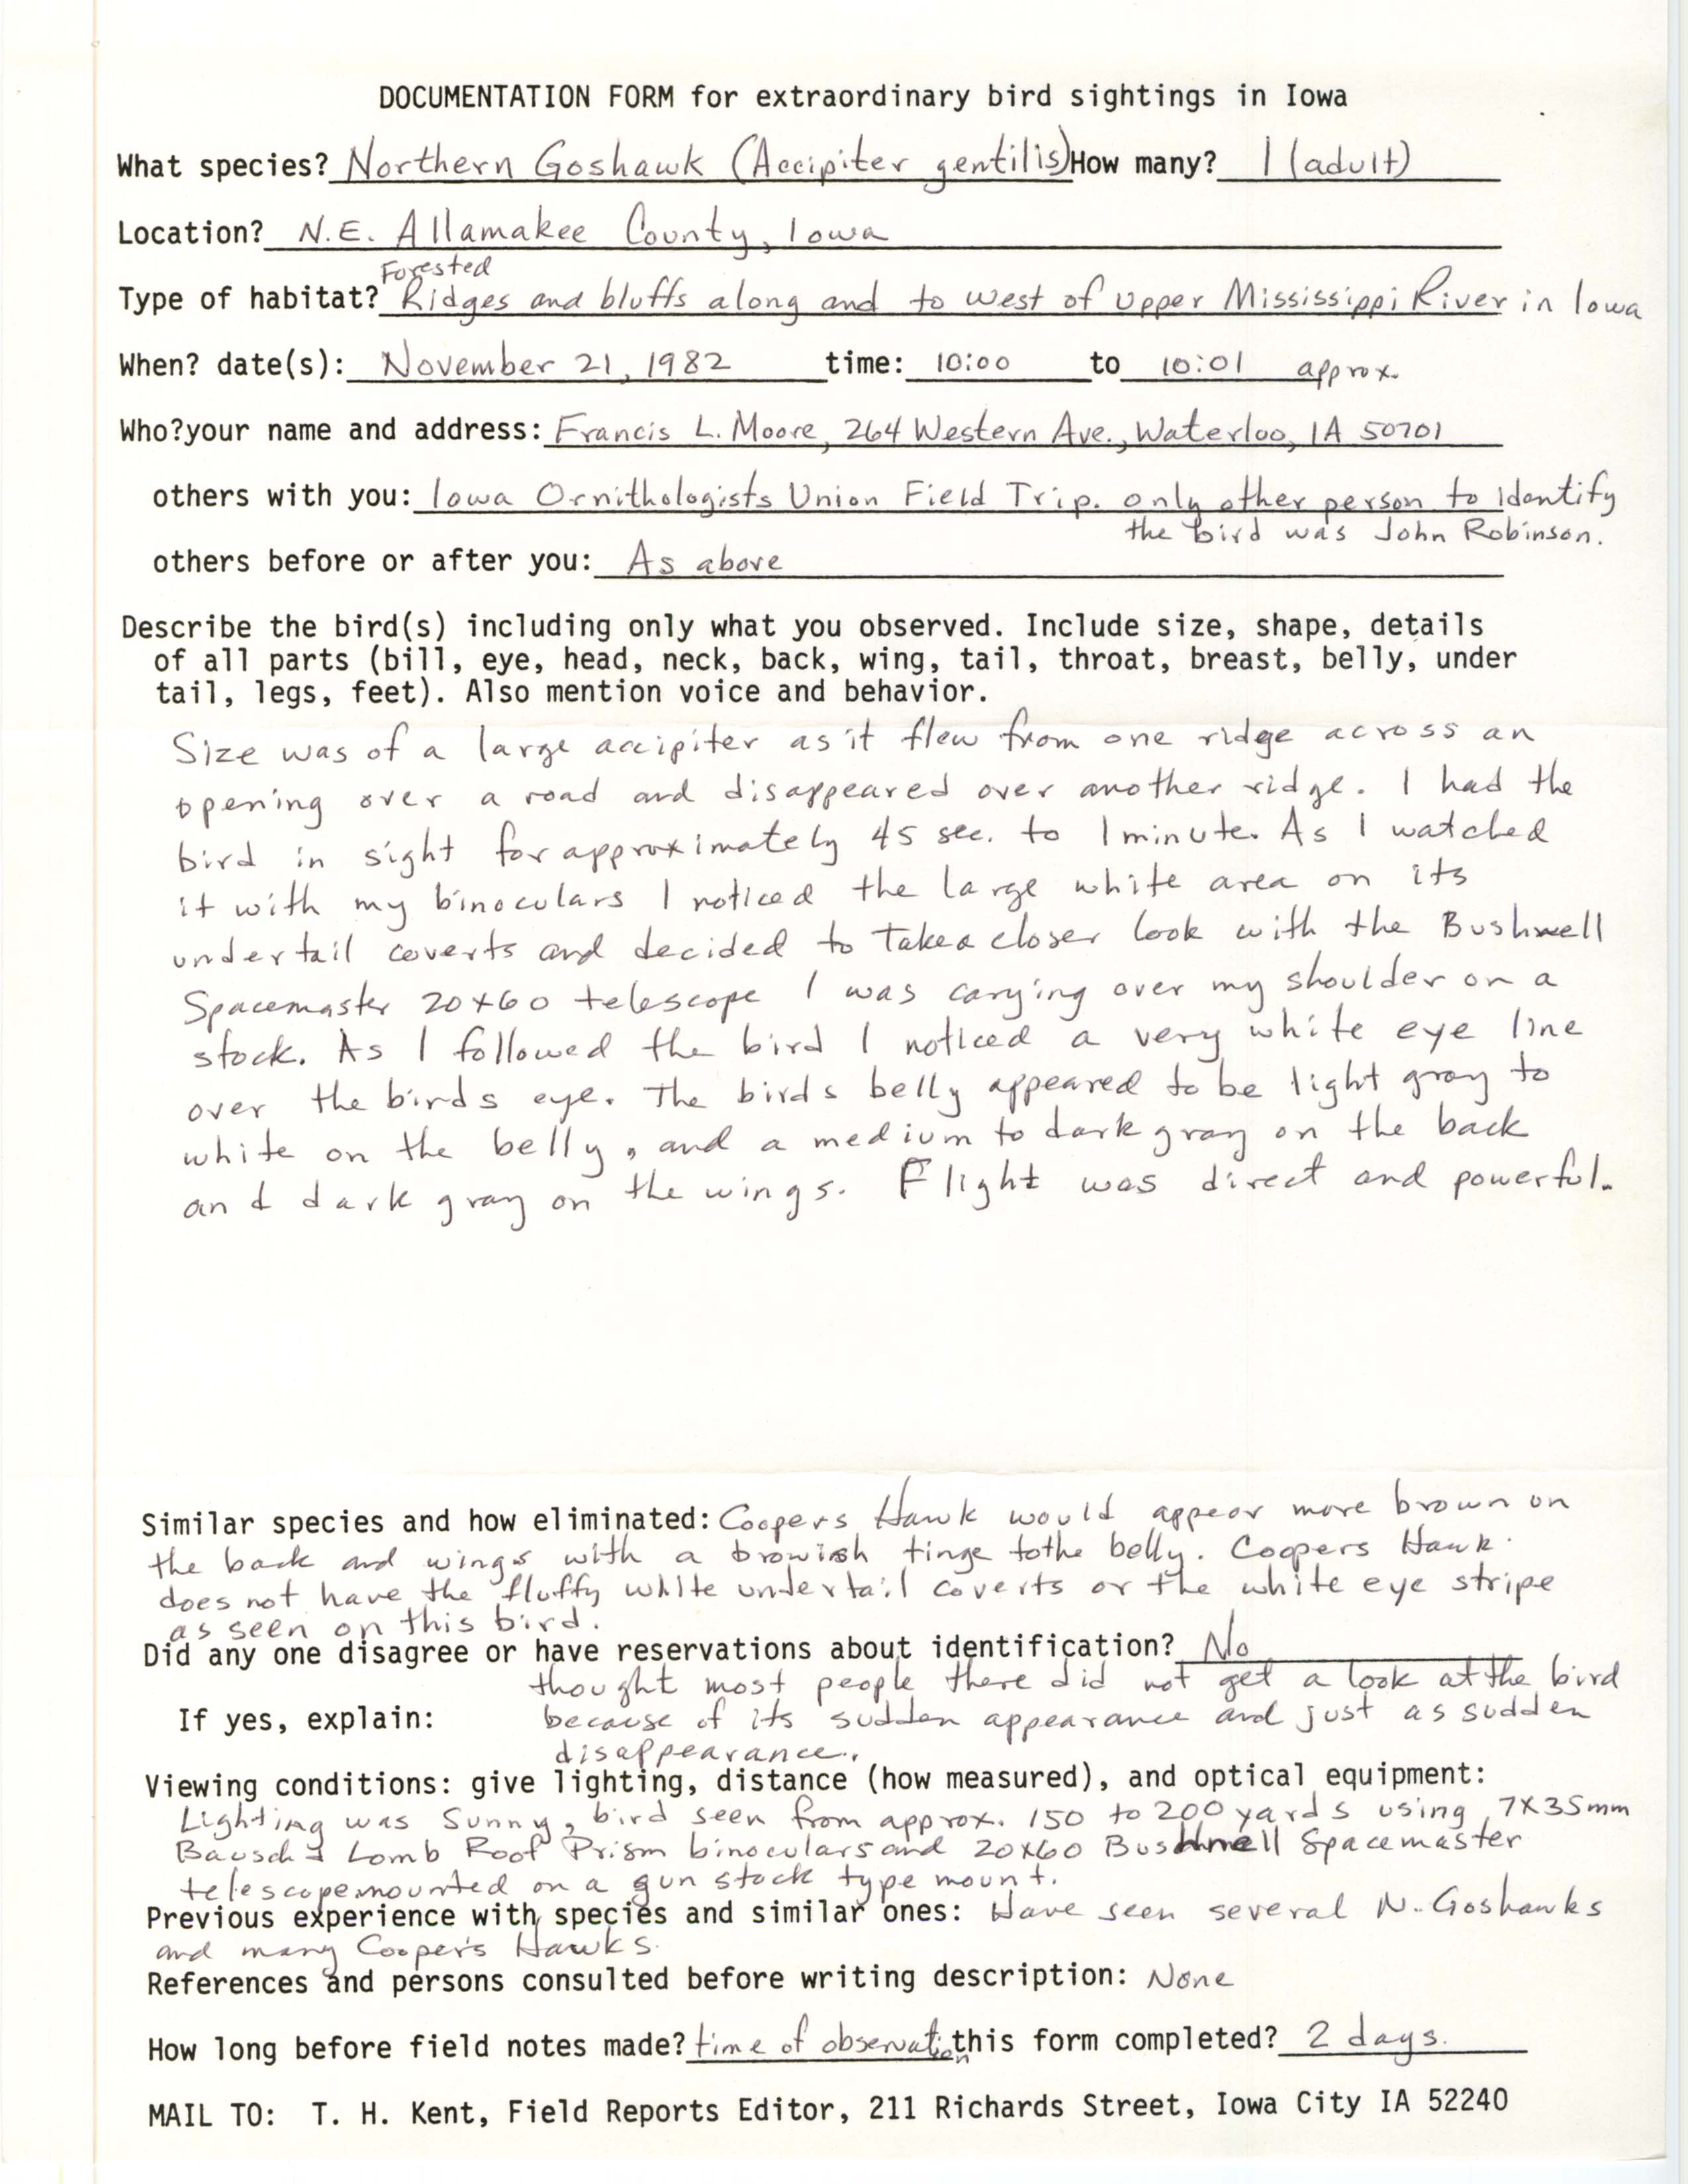 Rare bird documentation form for Northern Goshawk at Allamakee County, 1982